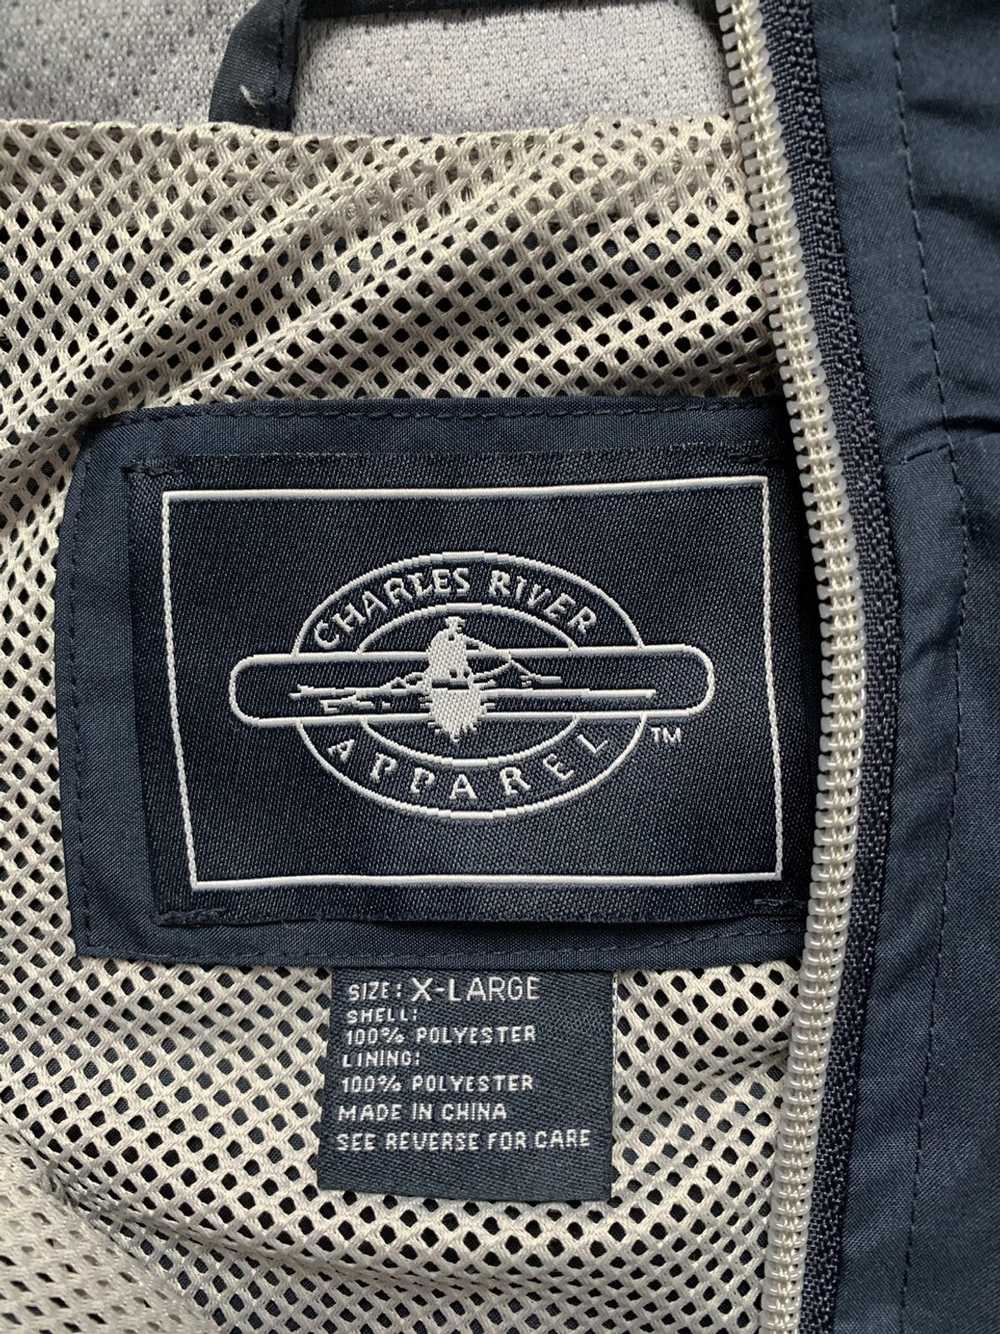 Windbreaker Vintage Hudson Windbreaker Jacket - image 3